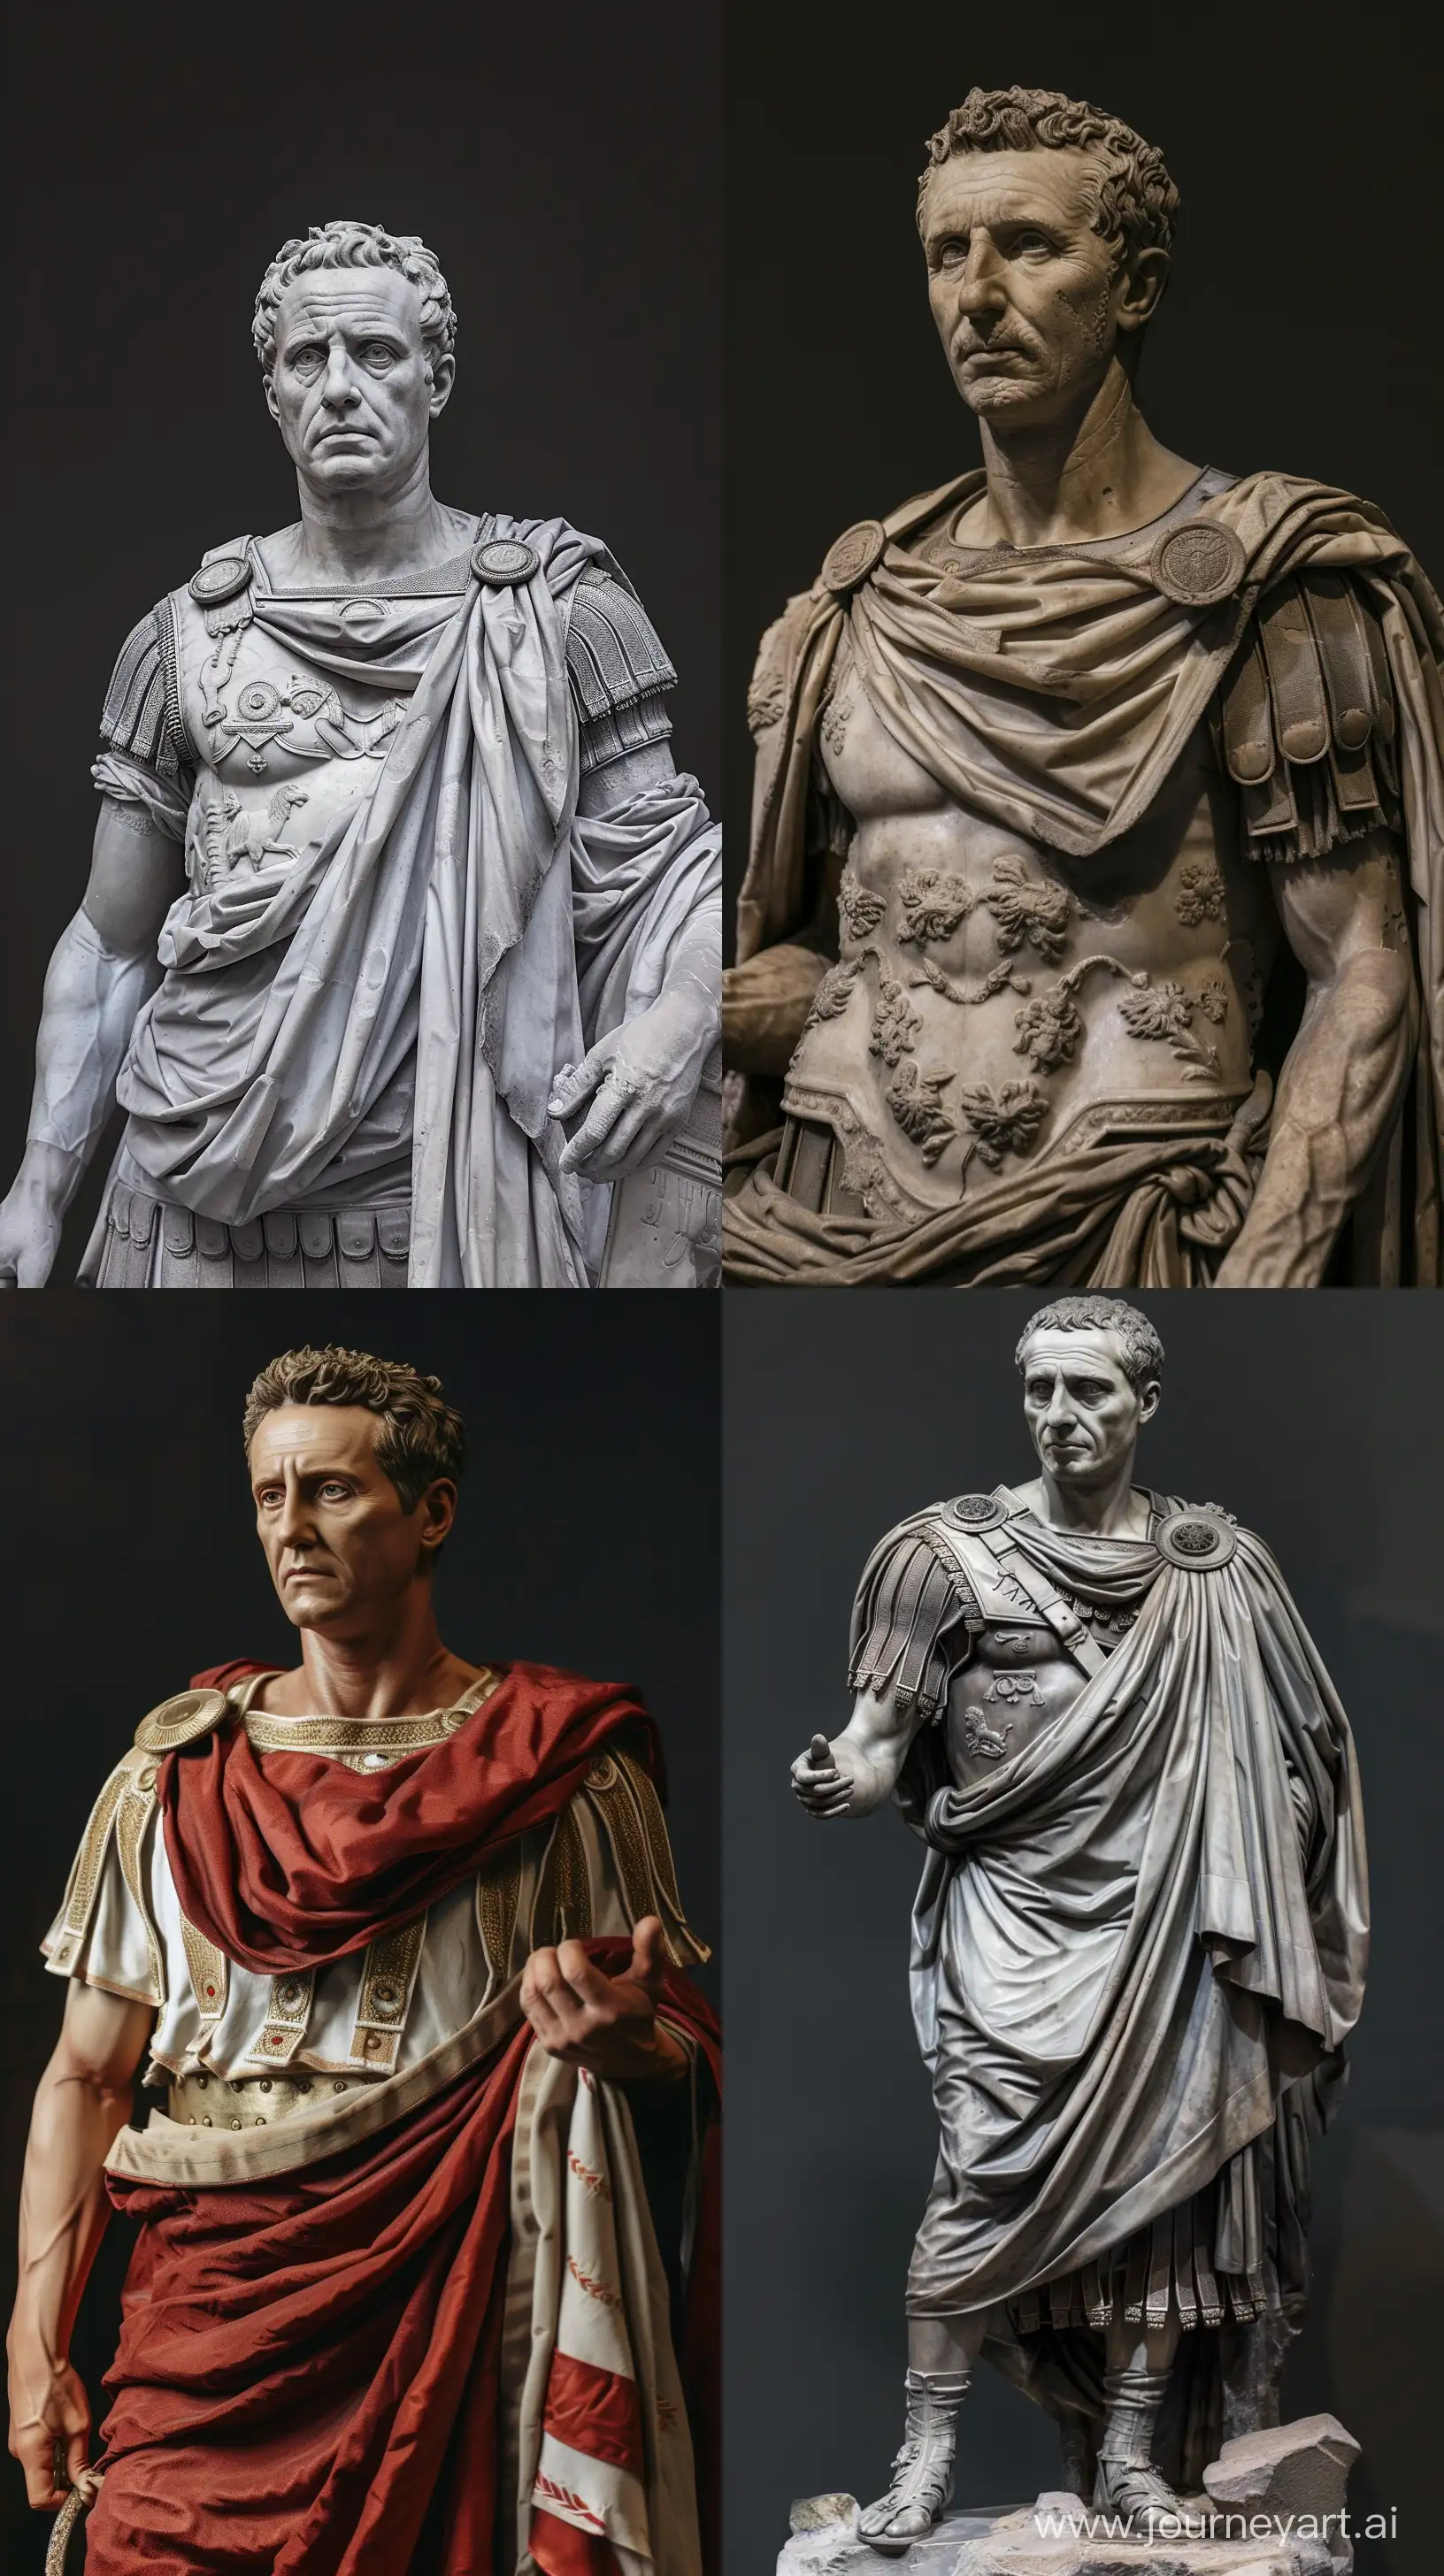 Julius-Caesar-Inspired-Corporate-Profile-Picture-in-Stock-Photo-Style